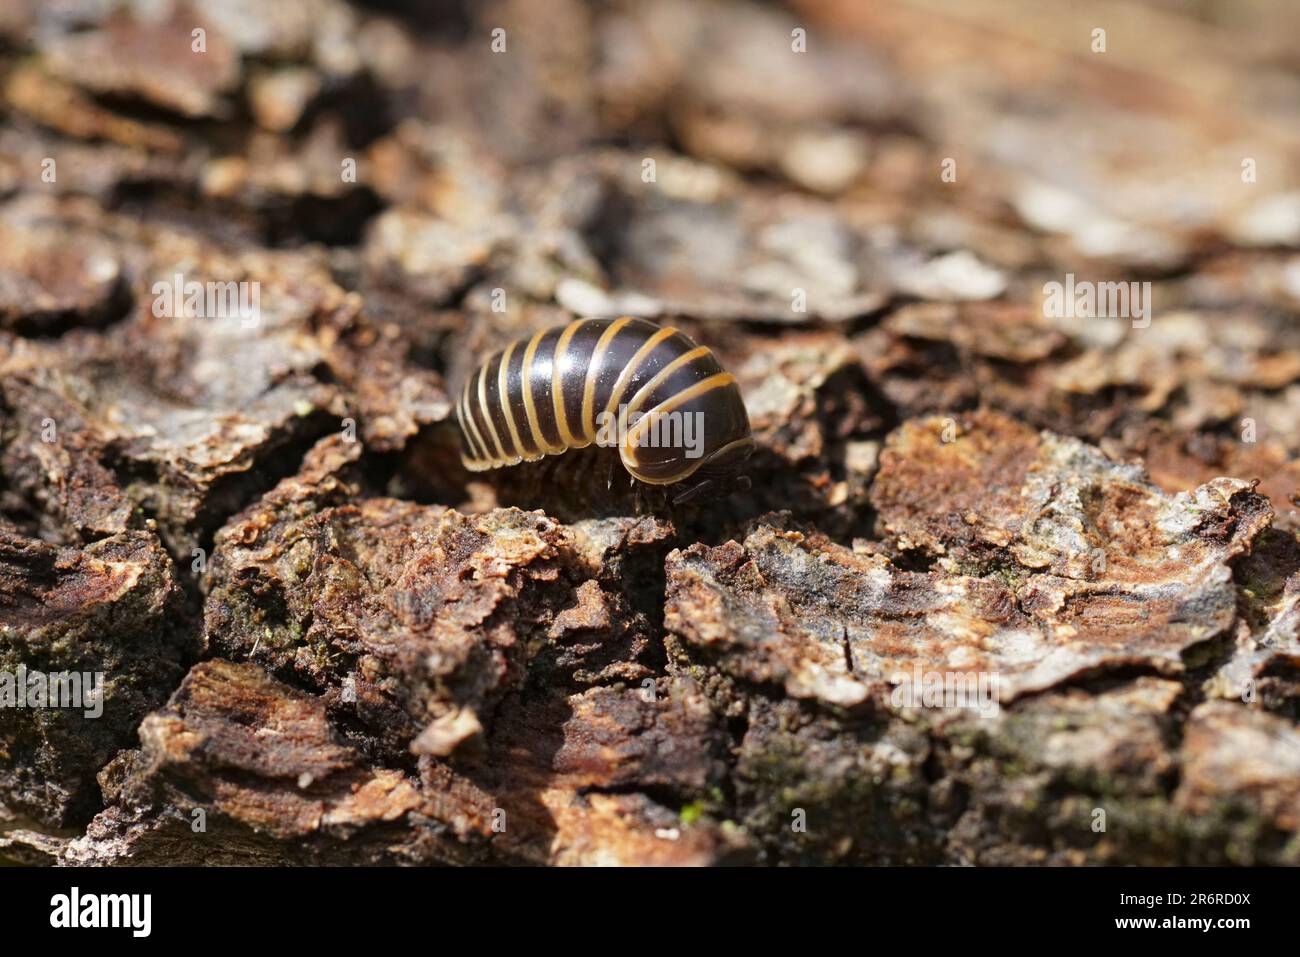 Natural closeup on the Mediterranean pillbug milliped, Glomeris marginata on wood Stock Photo